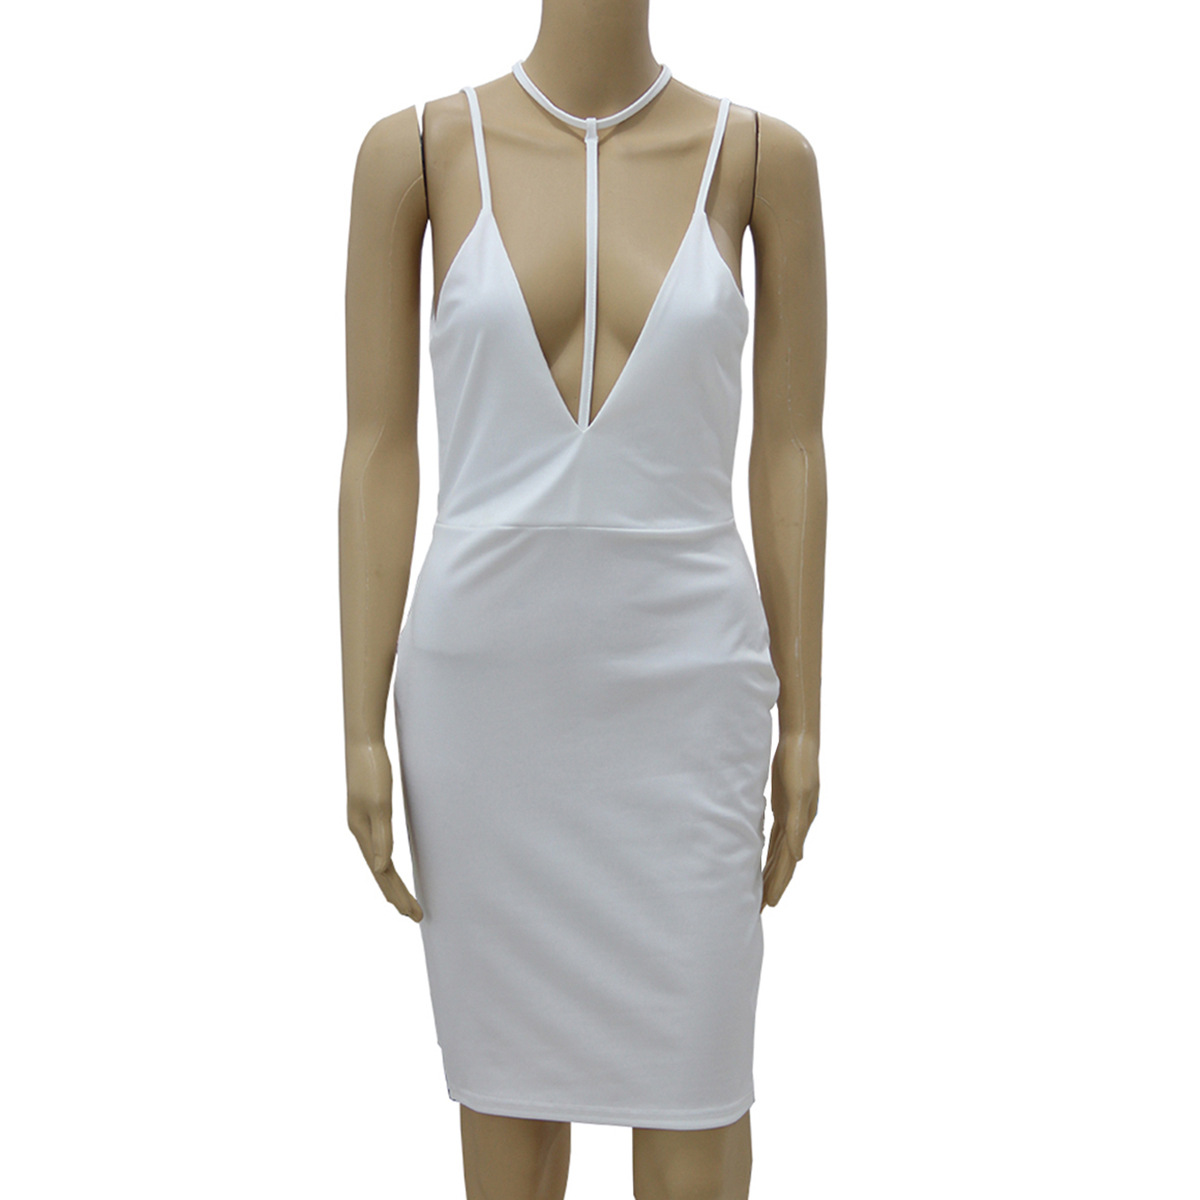 UZZDSS-Elegant-Halter-White-Bodycon-Dress-Women-Sleeveless-Deep-V-Neck-Summer-Sexy-Club-Mini-Dress-E-32792099112